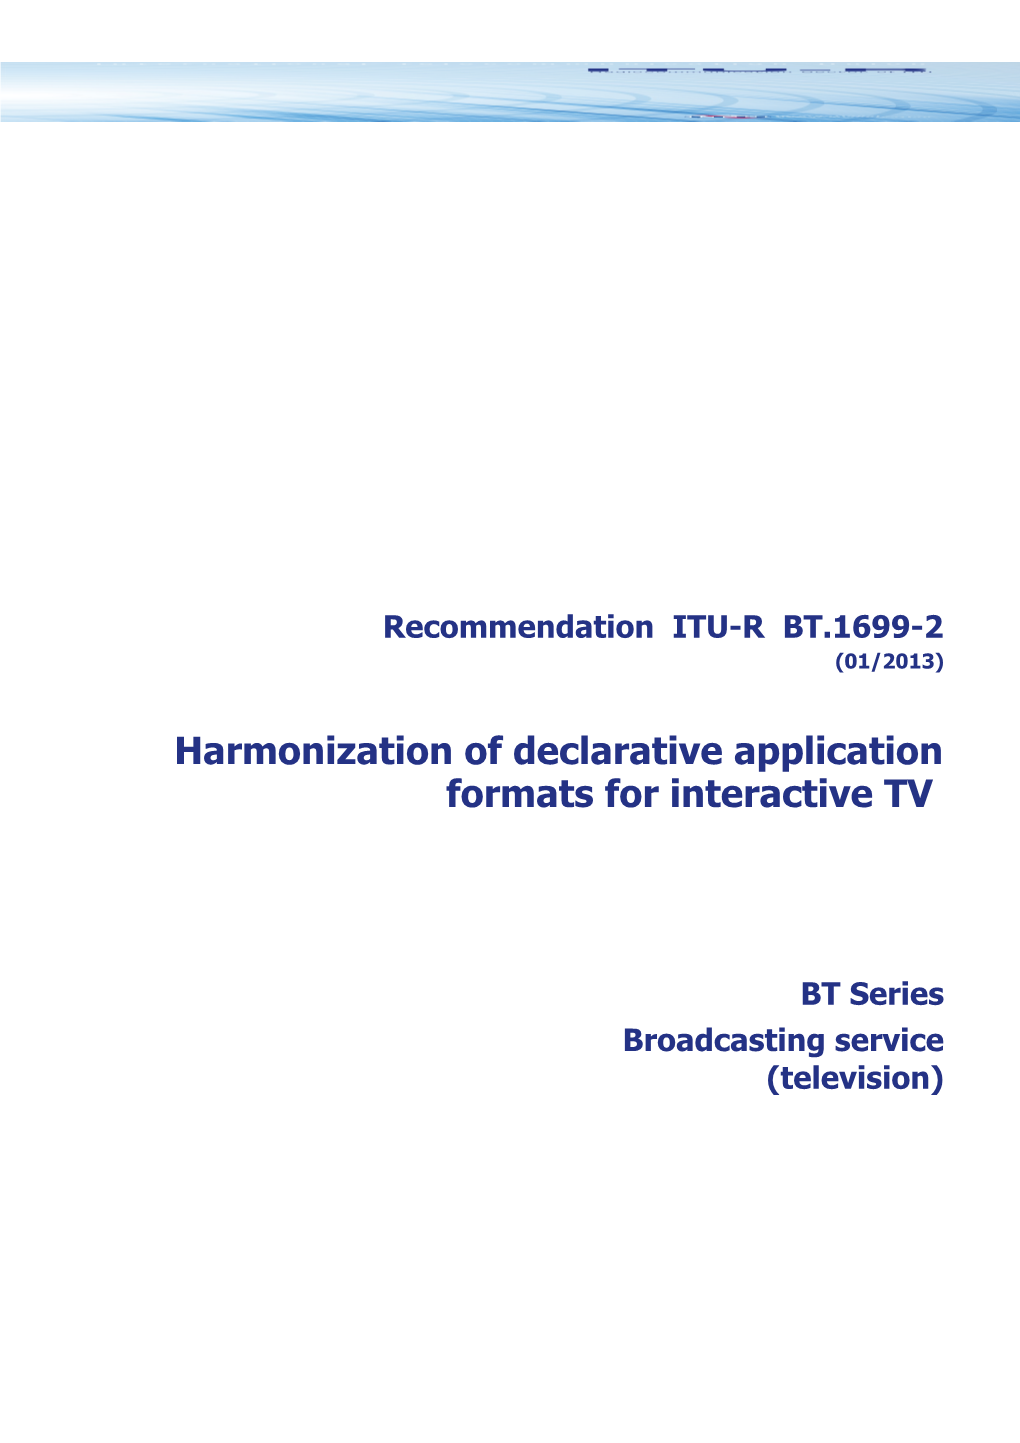 RECOMMENDATION ITU-R BT.1699-2 - Harmonization of Declarative Application(( Formats For